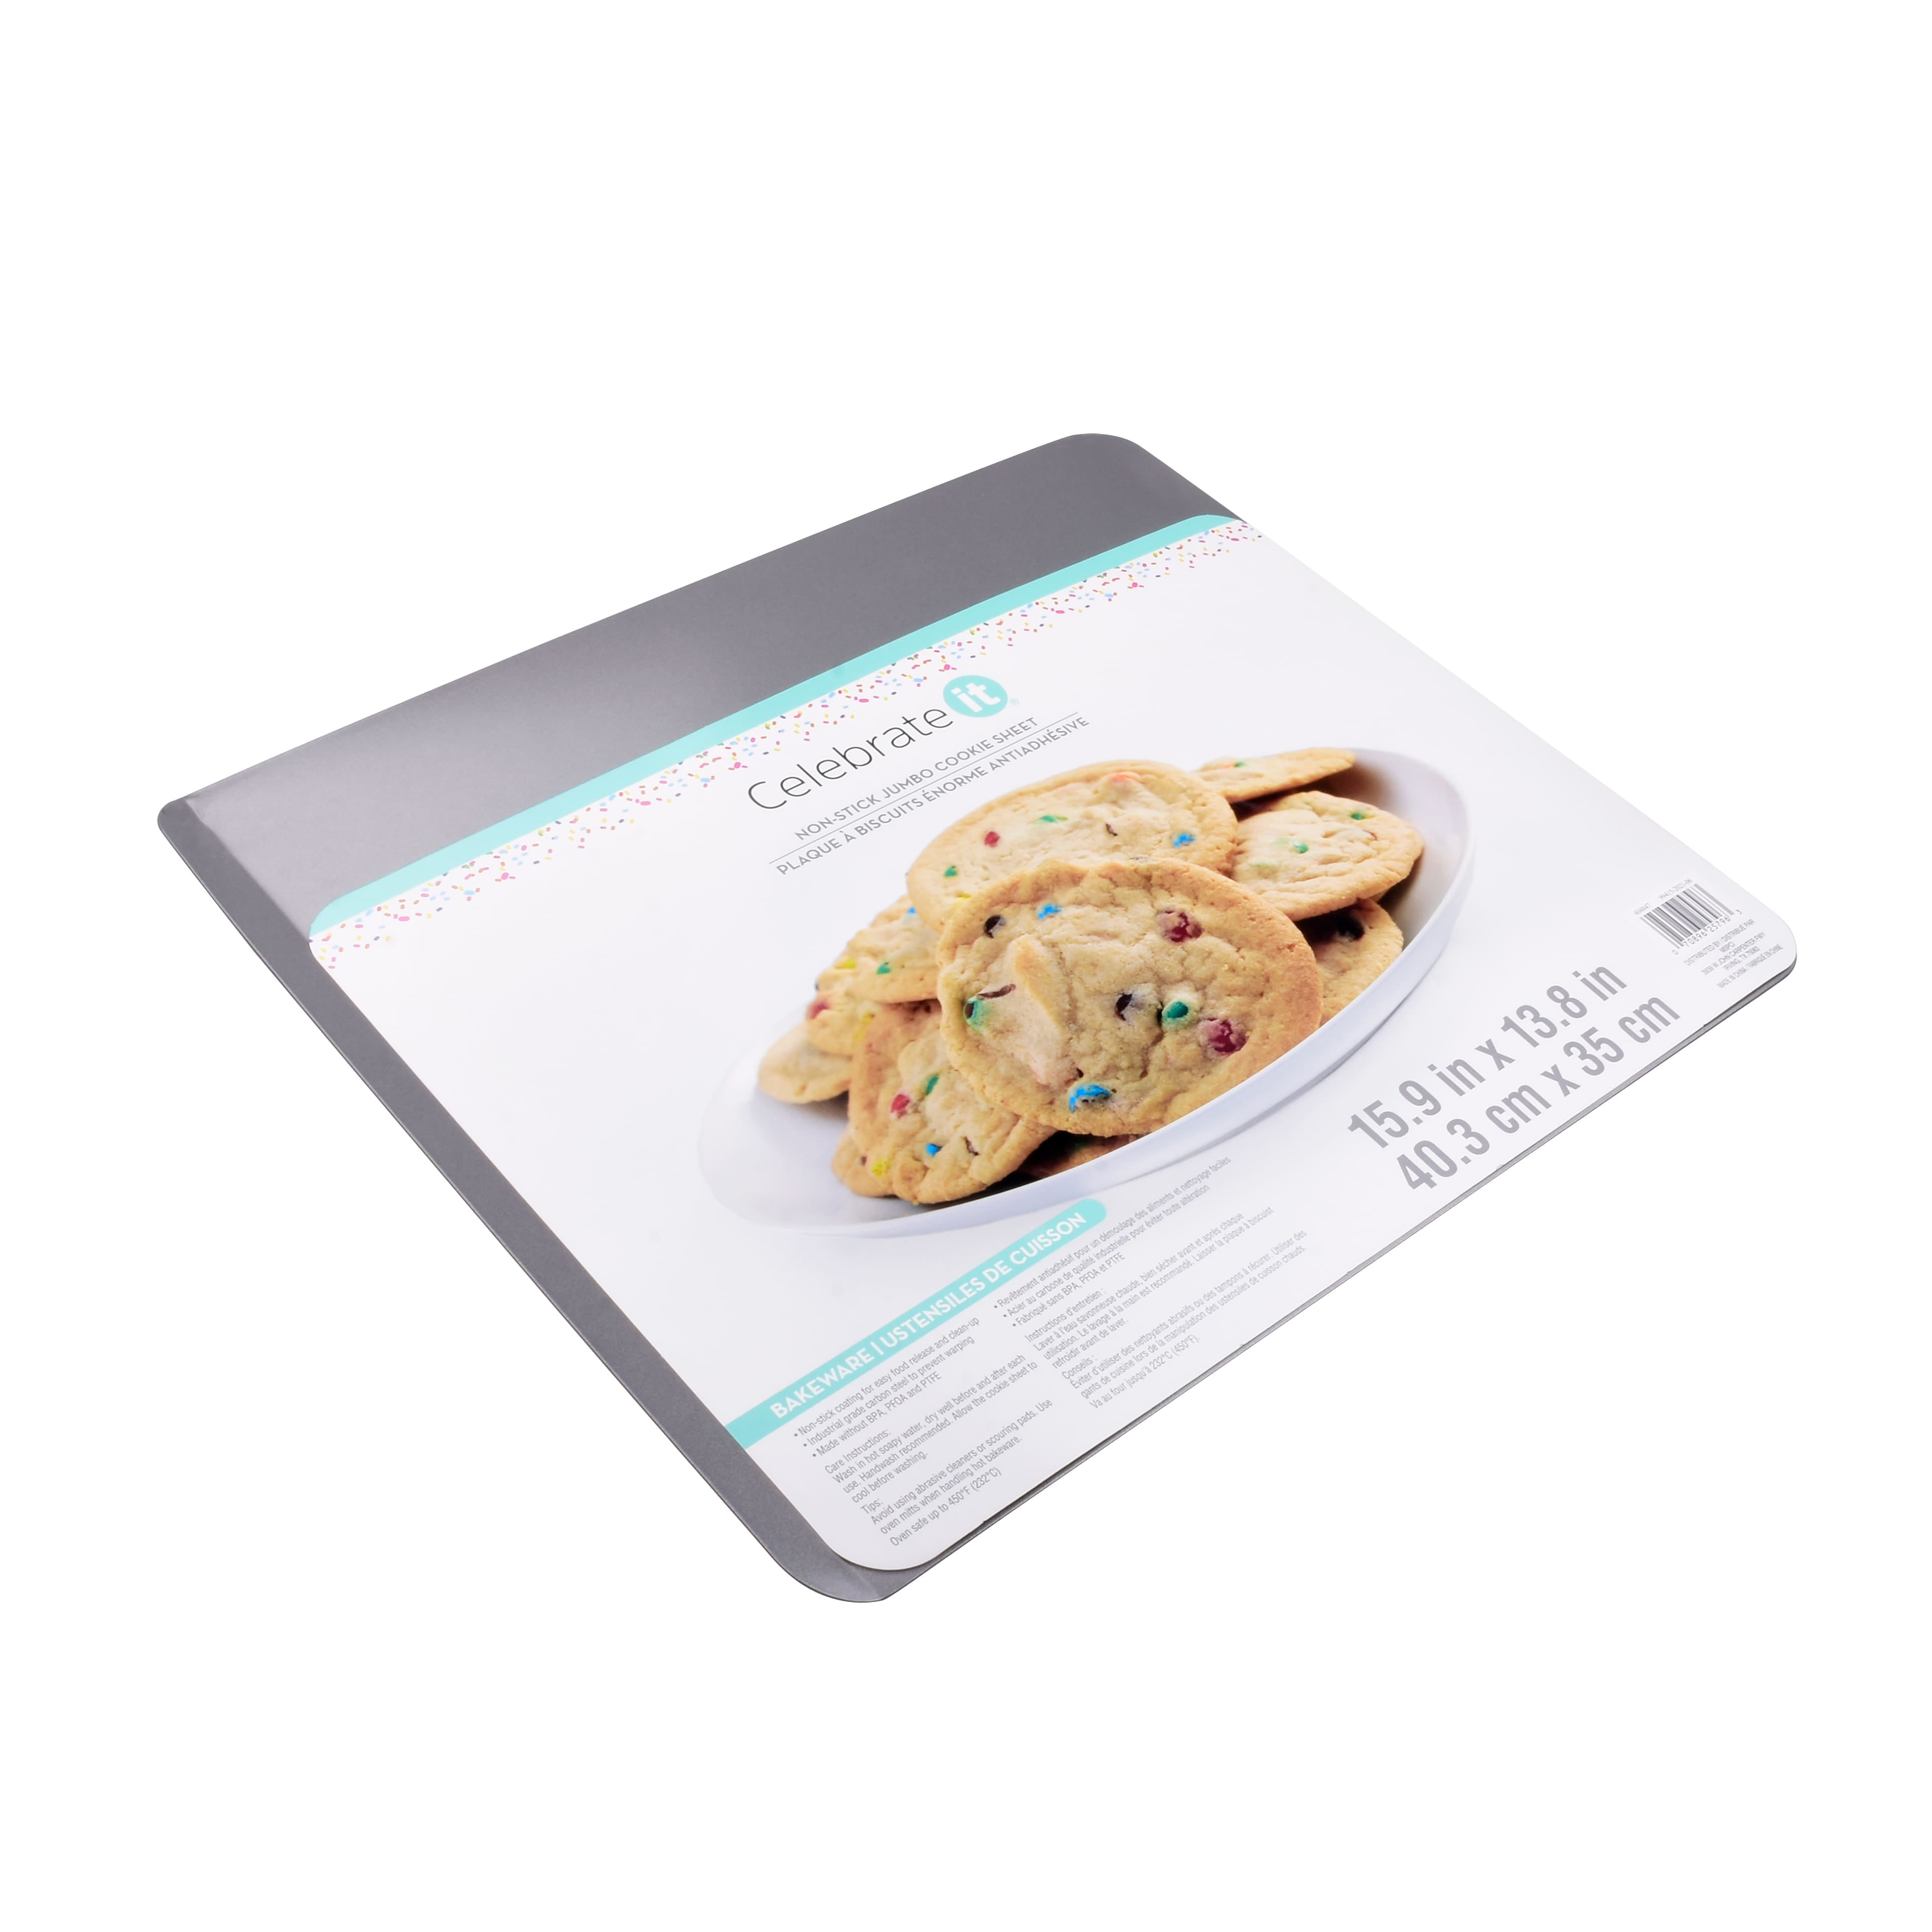 Wilton Non-Stick Cookie Sheet, 16 x 14 - WebstaurantStore